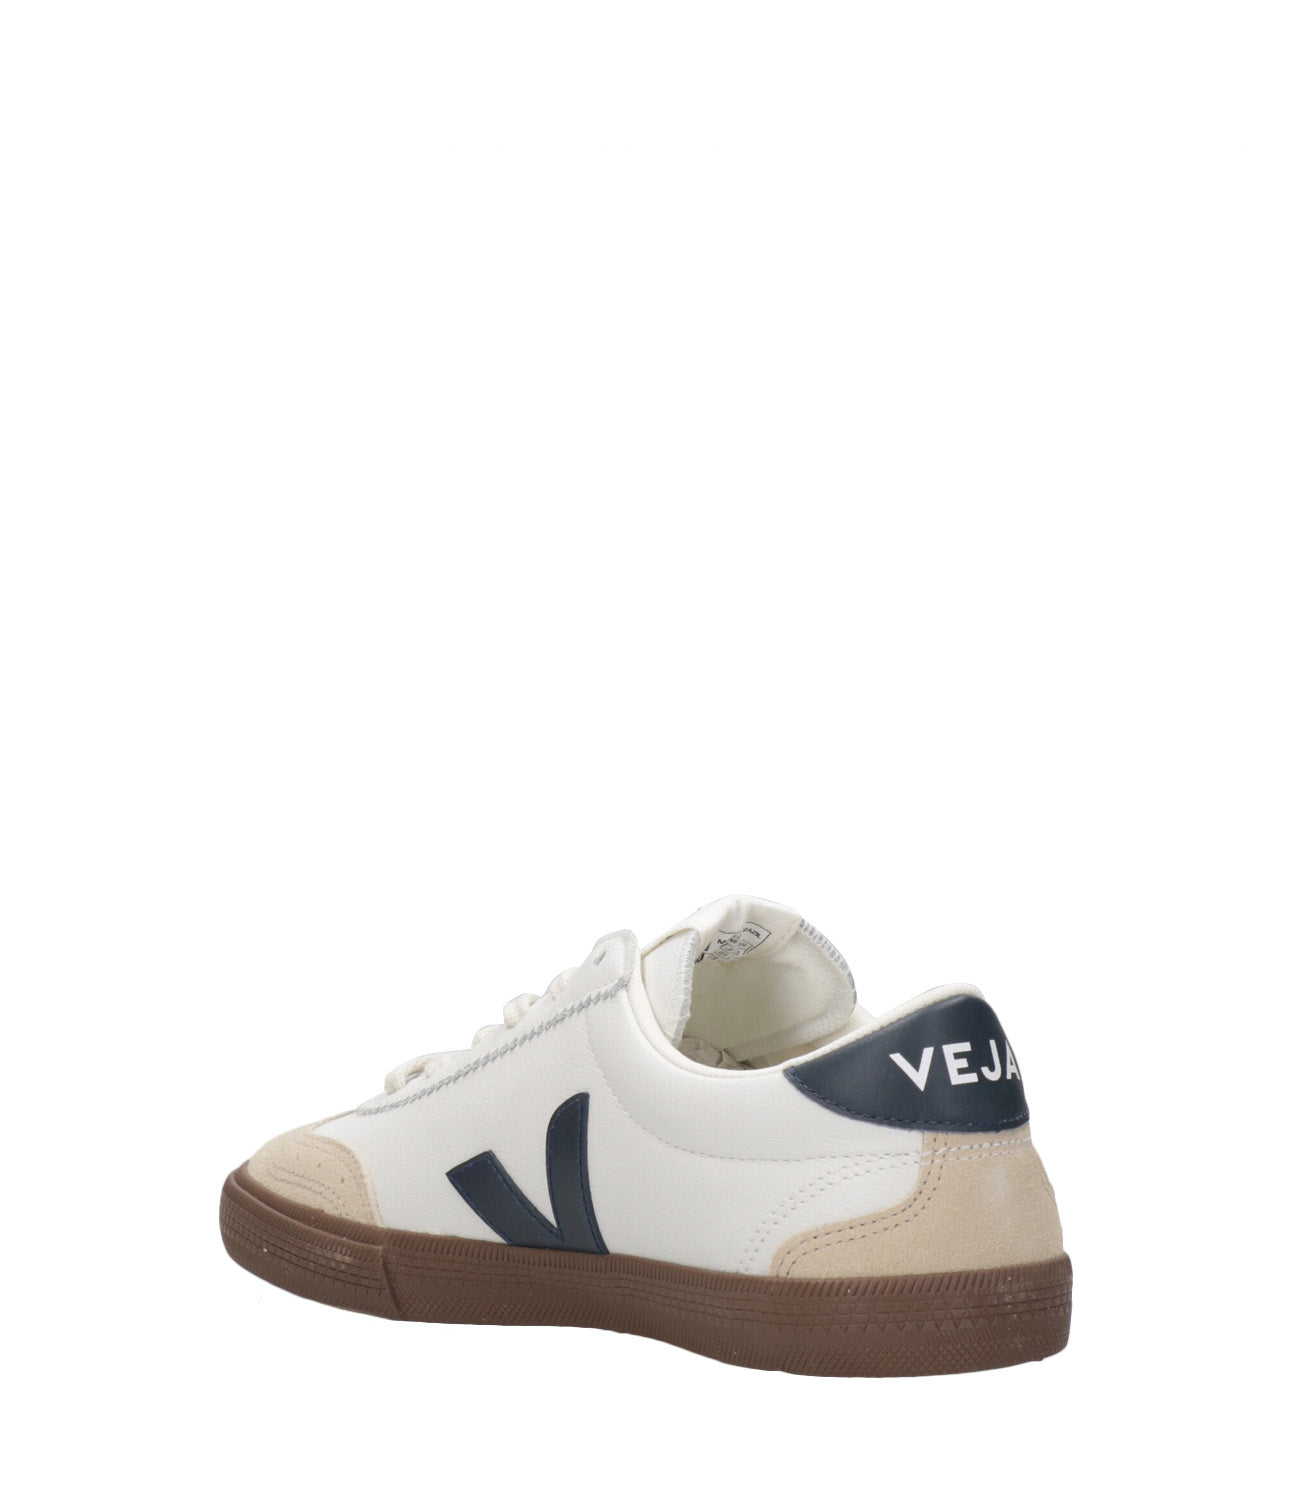 Veja | Sneakers Volley Bianco e Blu Navy